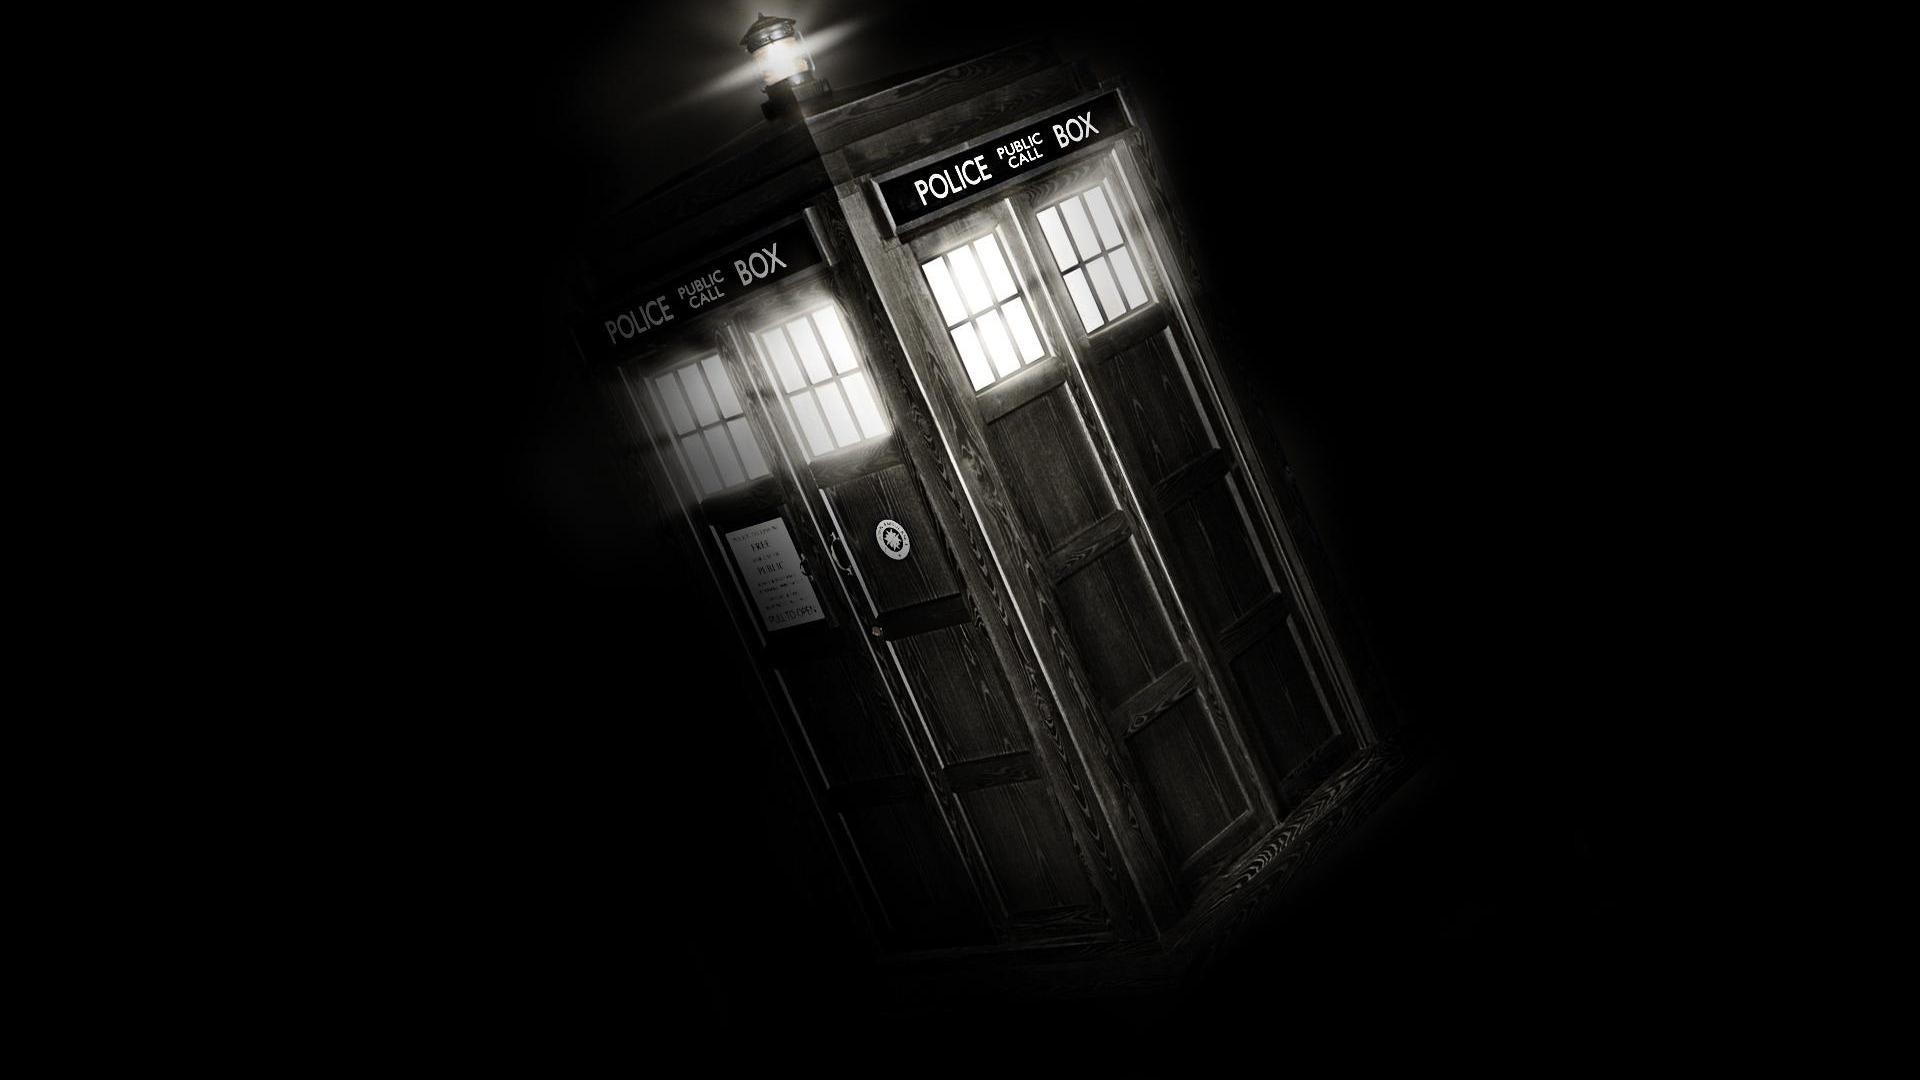 Doctor Who Tardis TV TARDIS Shows HD Wallpapers, Desktop